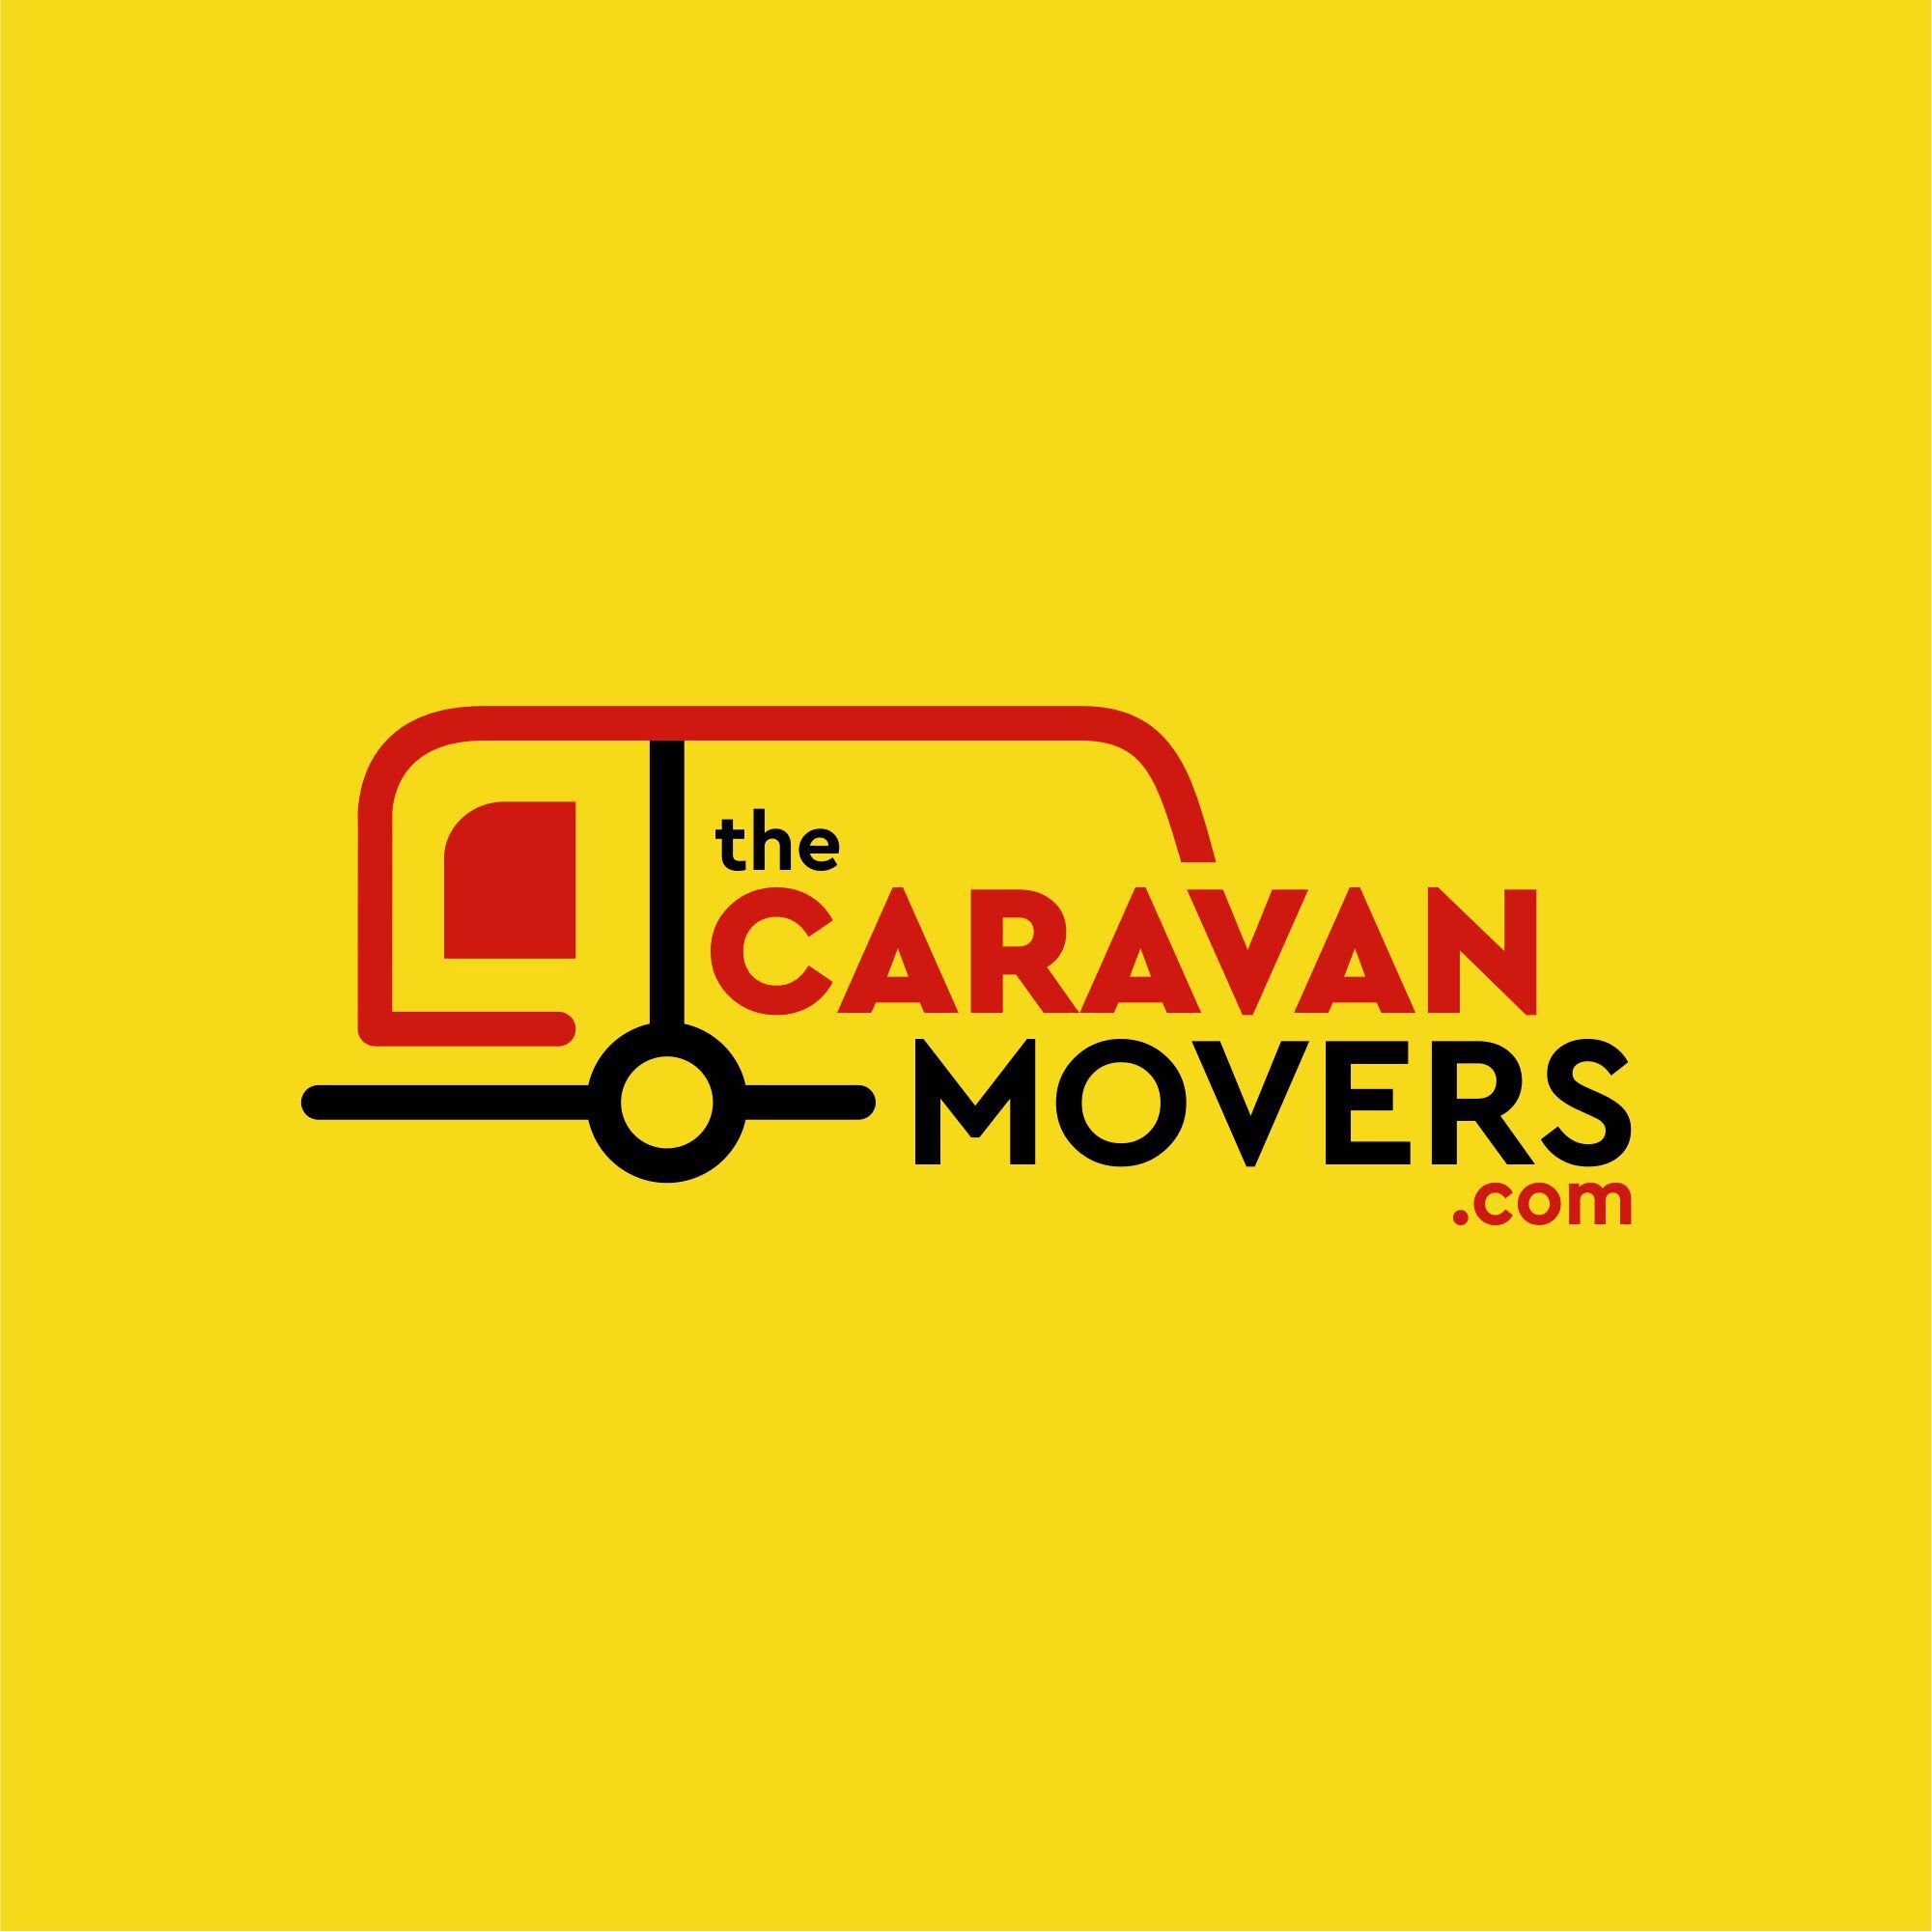 The Caravan Movers Ltd - Edinburgh, Midlothian - 03700 420402 | ShowMeLocal.com